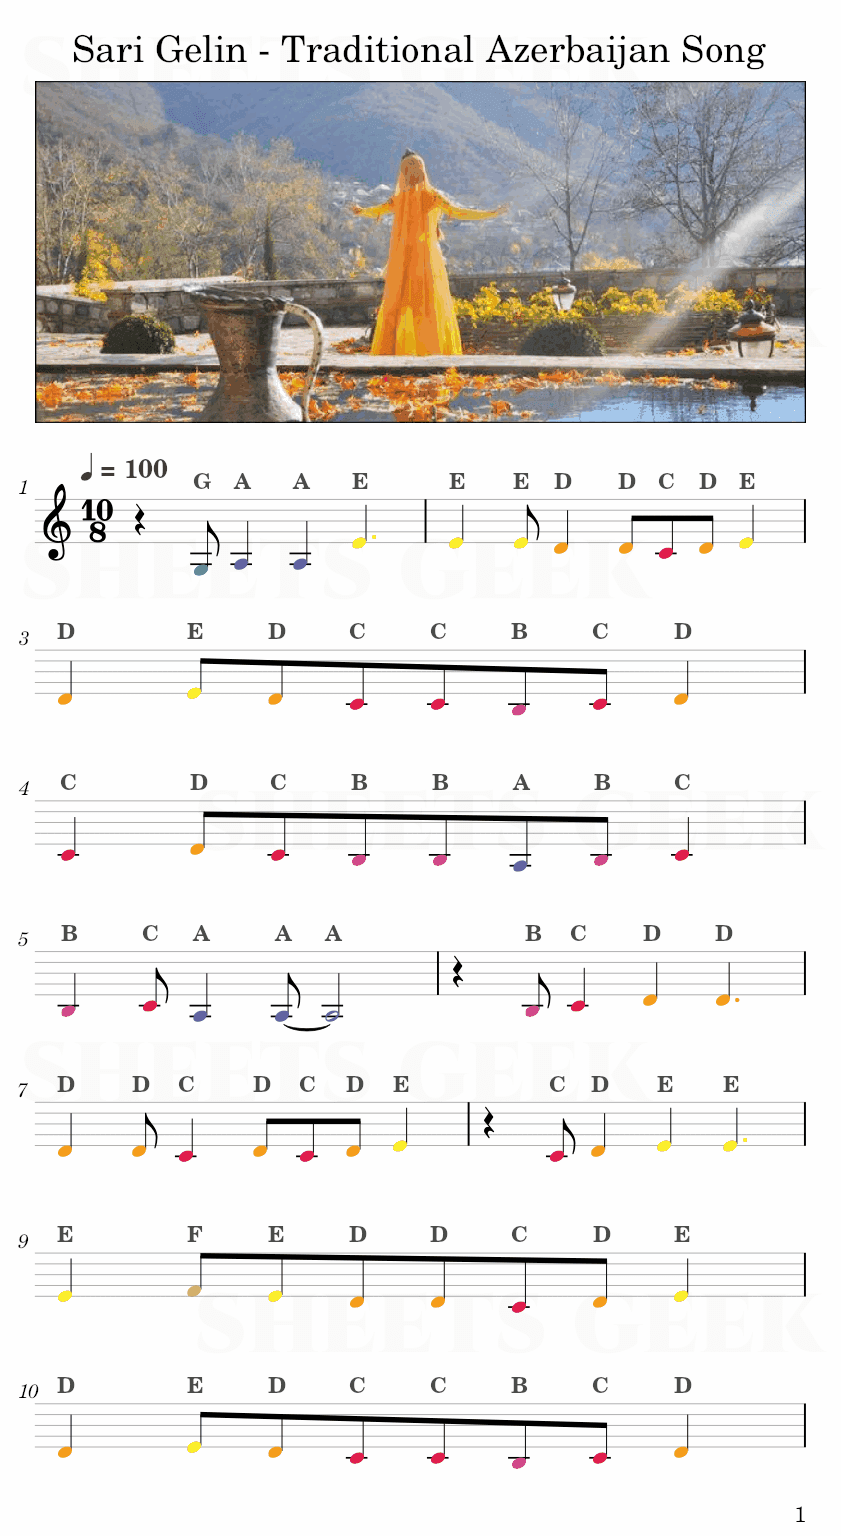 Sari Gelin - Traditional Azerbaijan Song Easy Sheet Music Free for piano, keyboard, flute, violin, sax, cello page 1